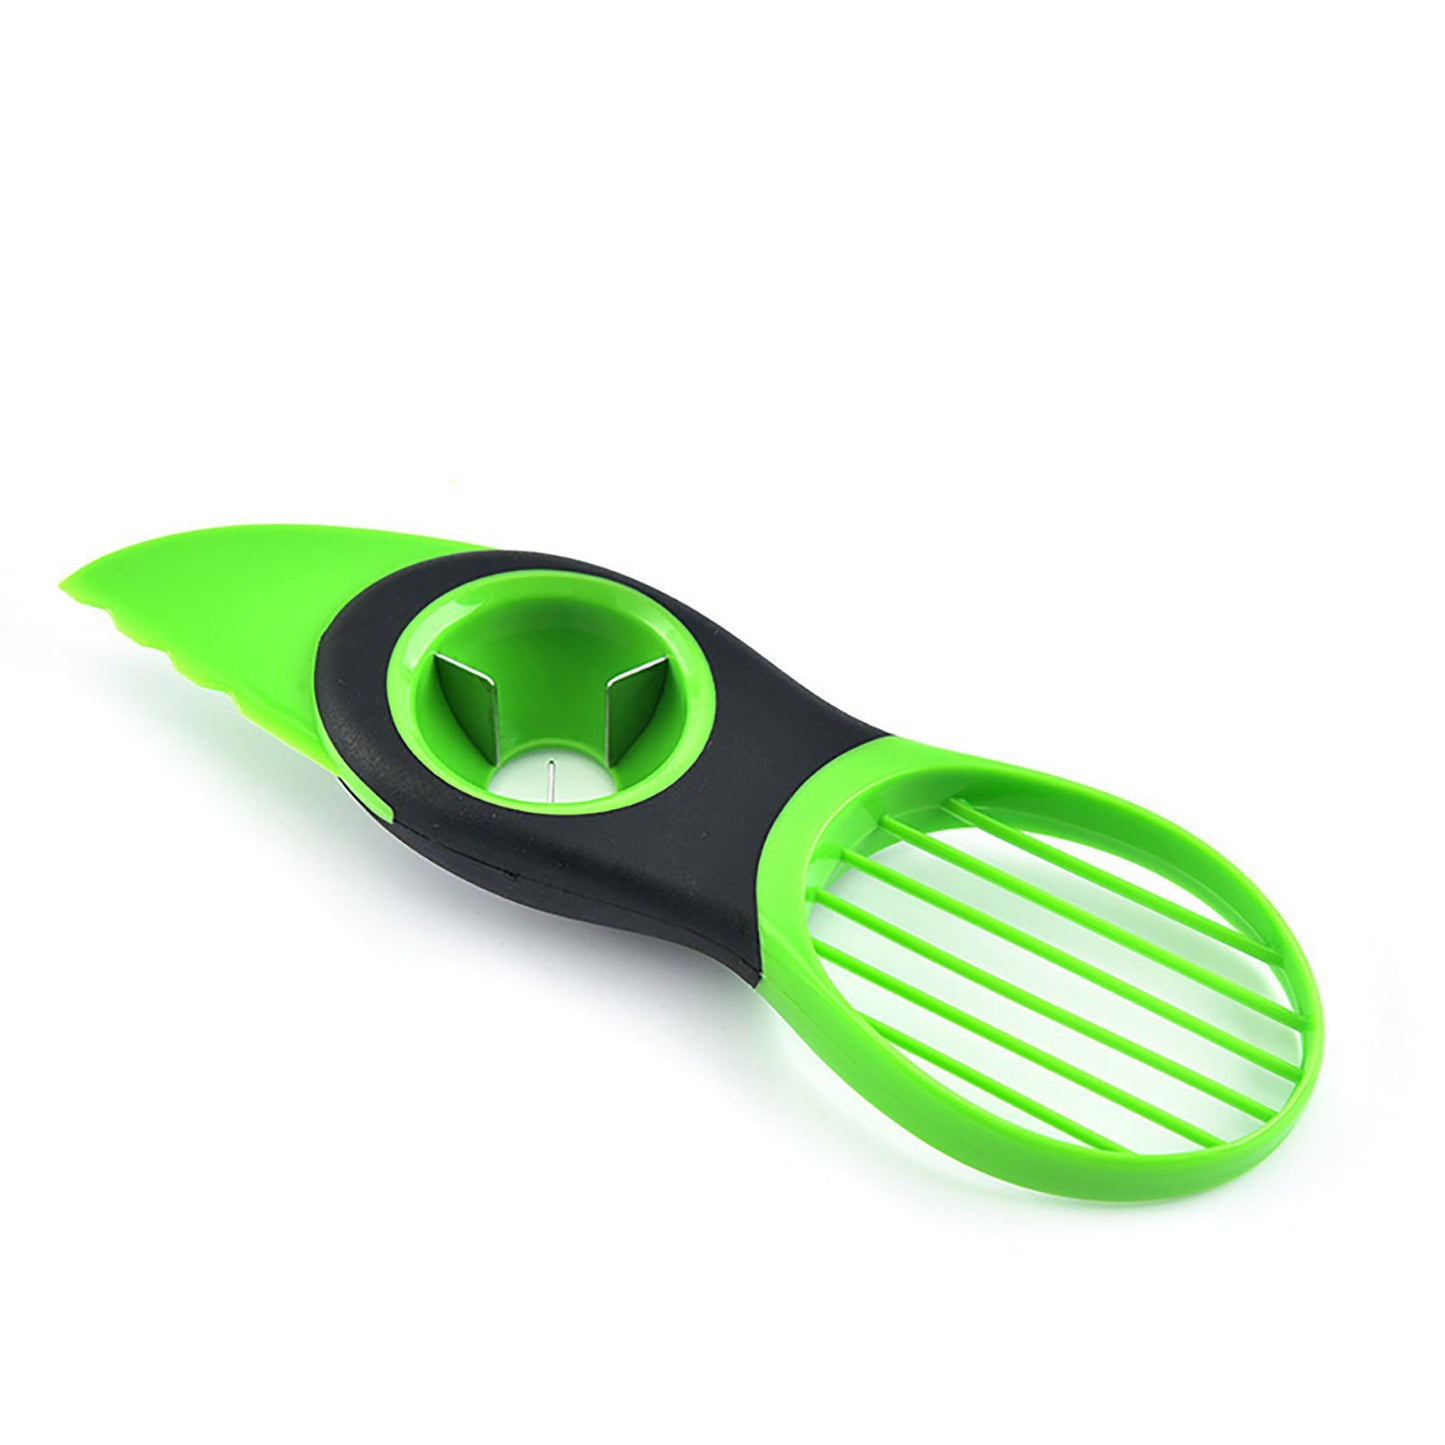 OXO Softworks Avocado Slicer 3-in-1 (1 ct) Delivery - DoorDash